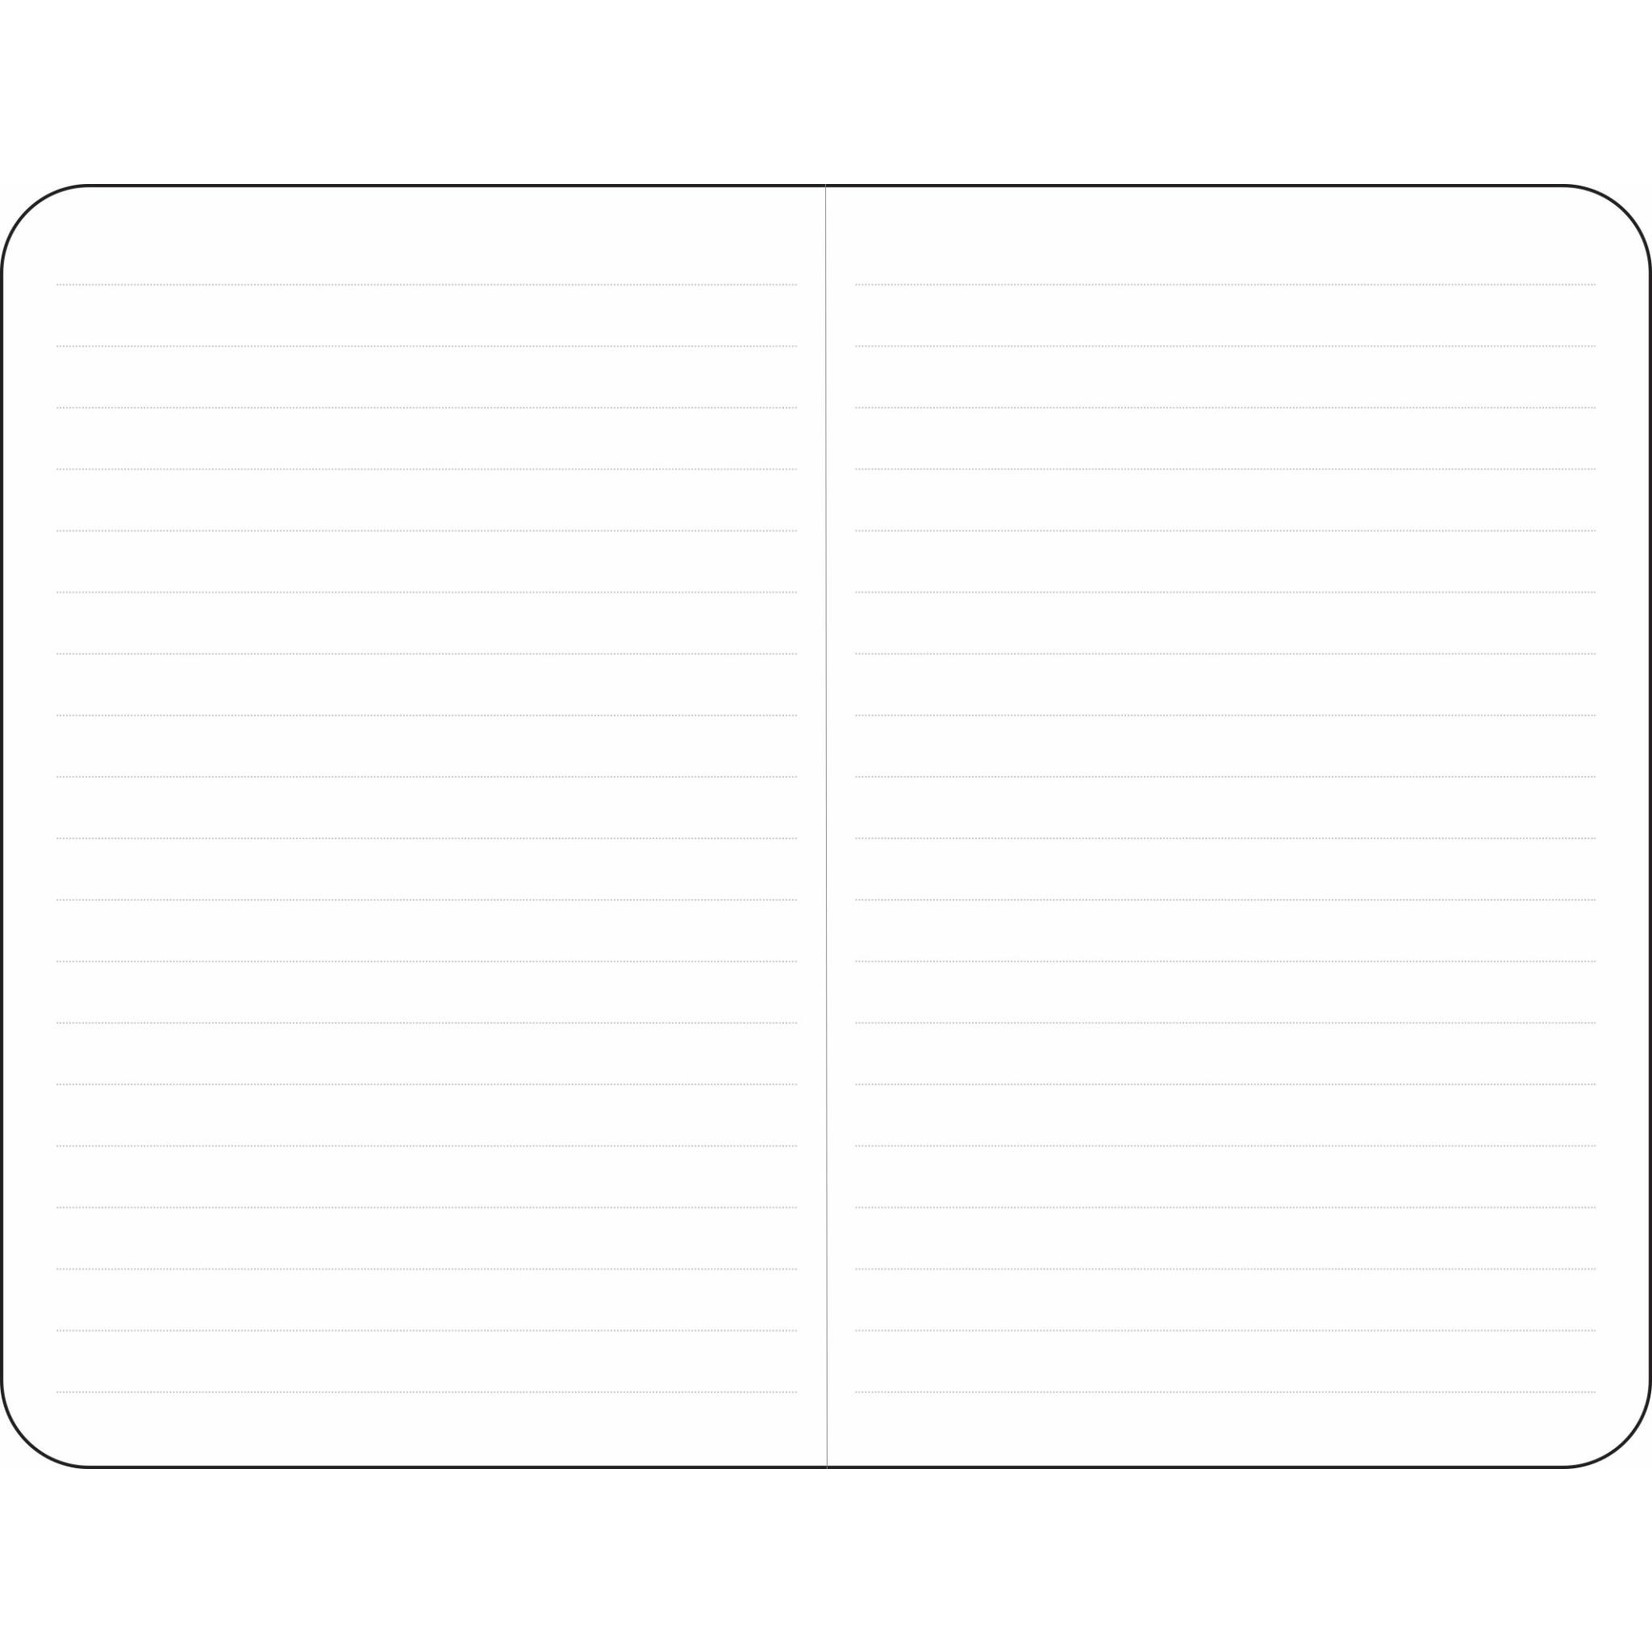 Peter Pauper Press Jotter Notebooks: Sloths (3-pack) (Lined Pattern)